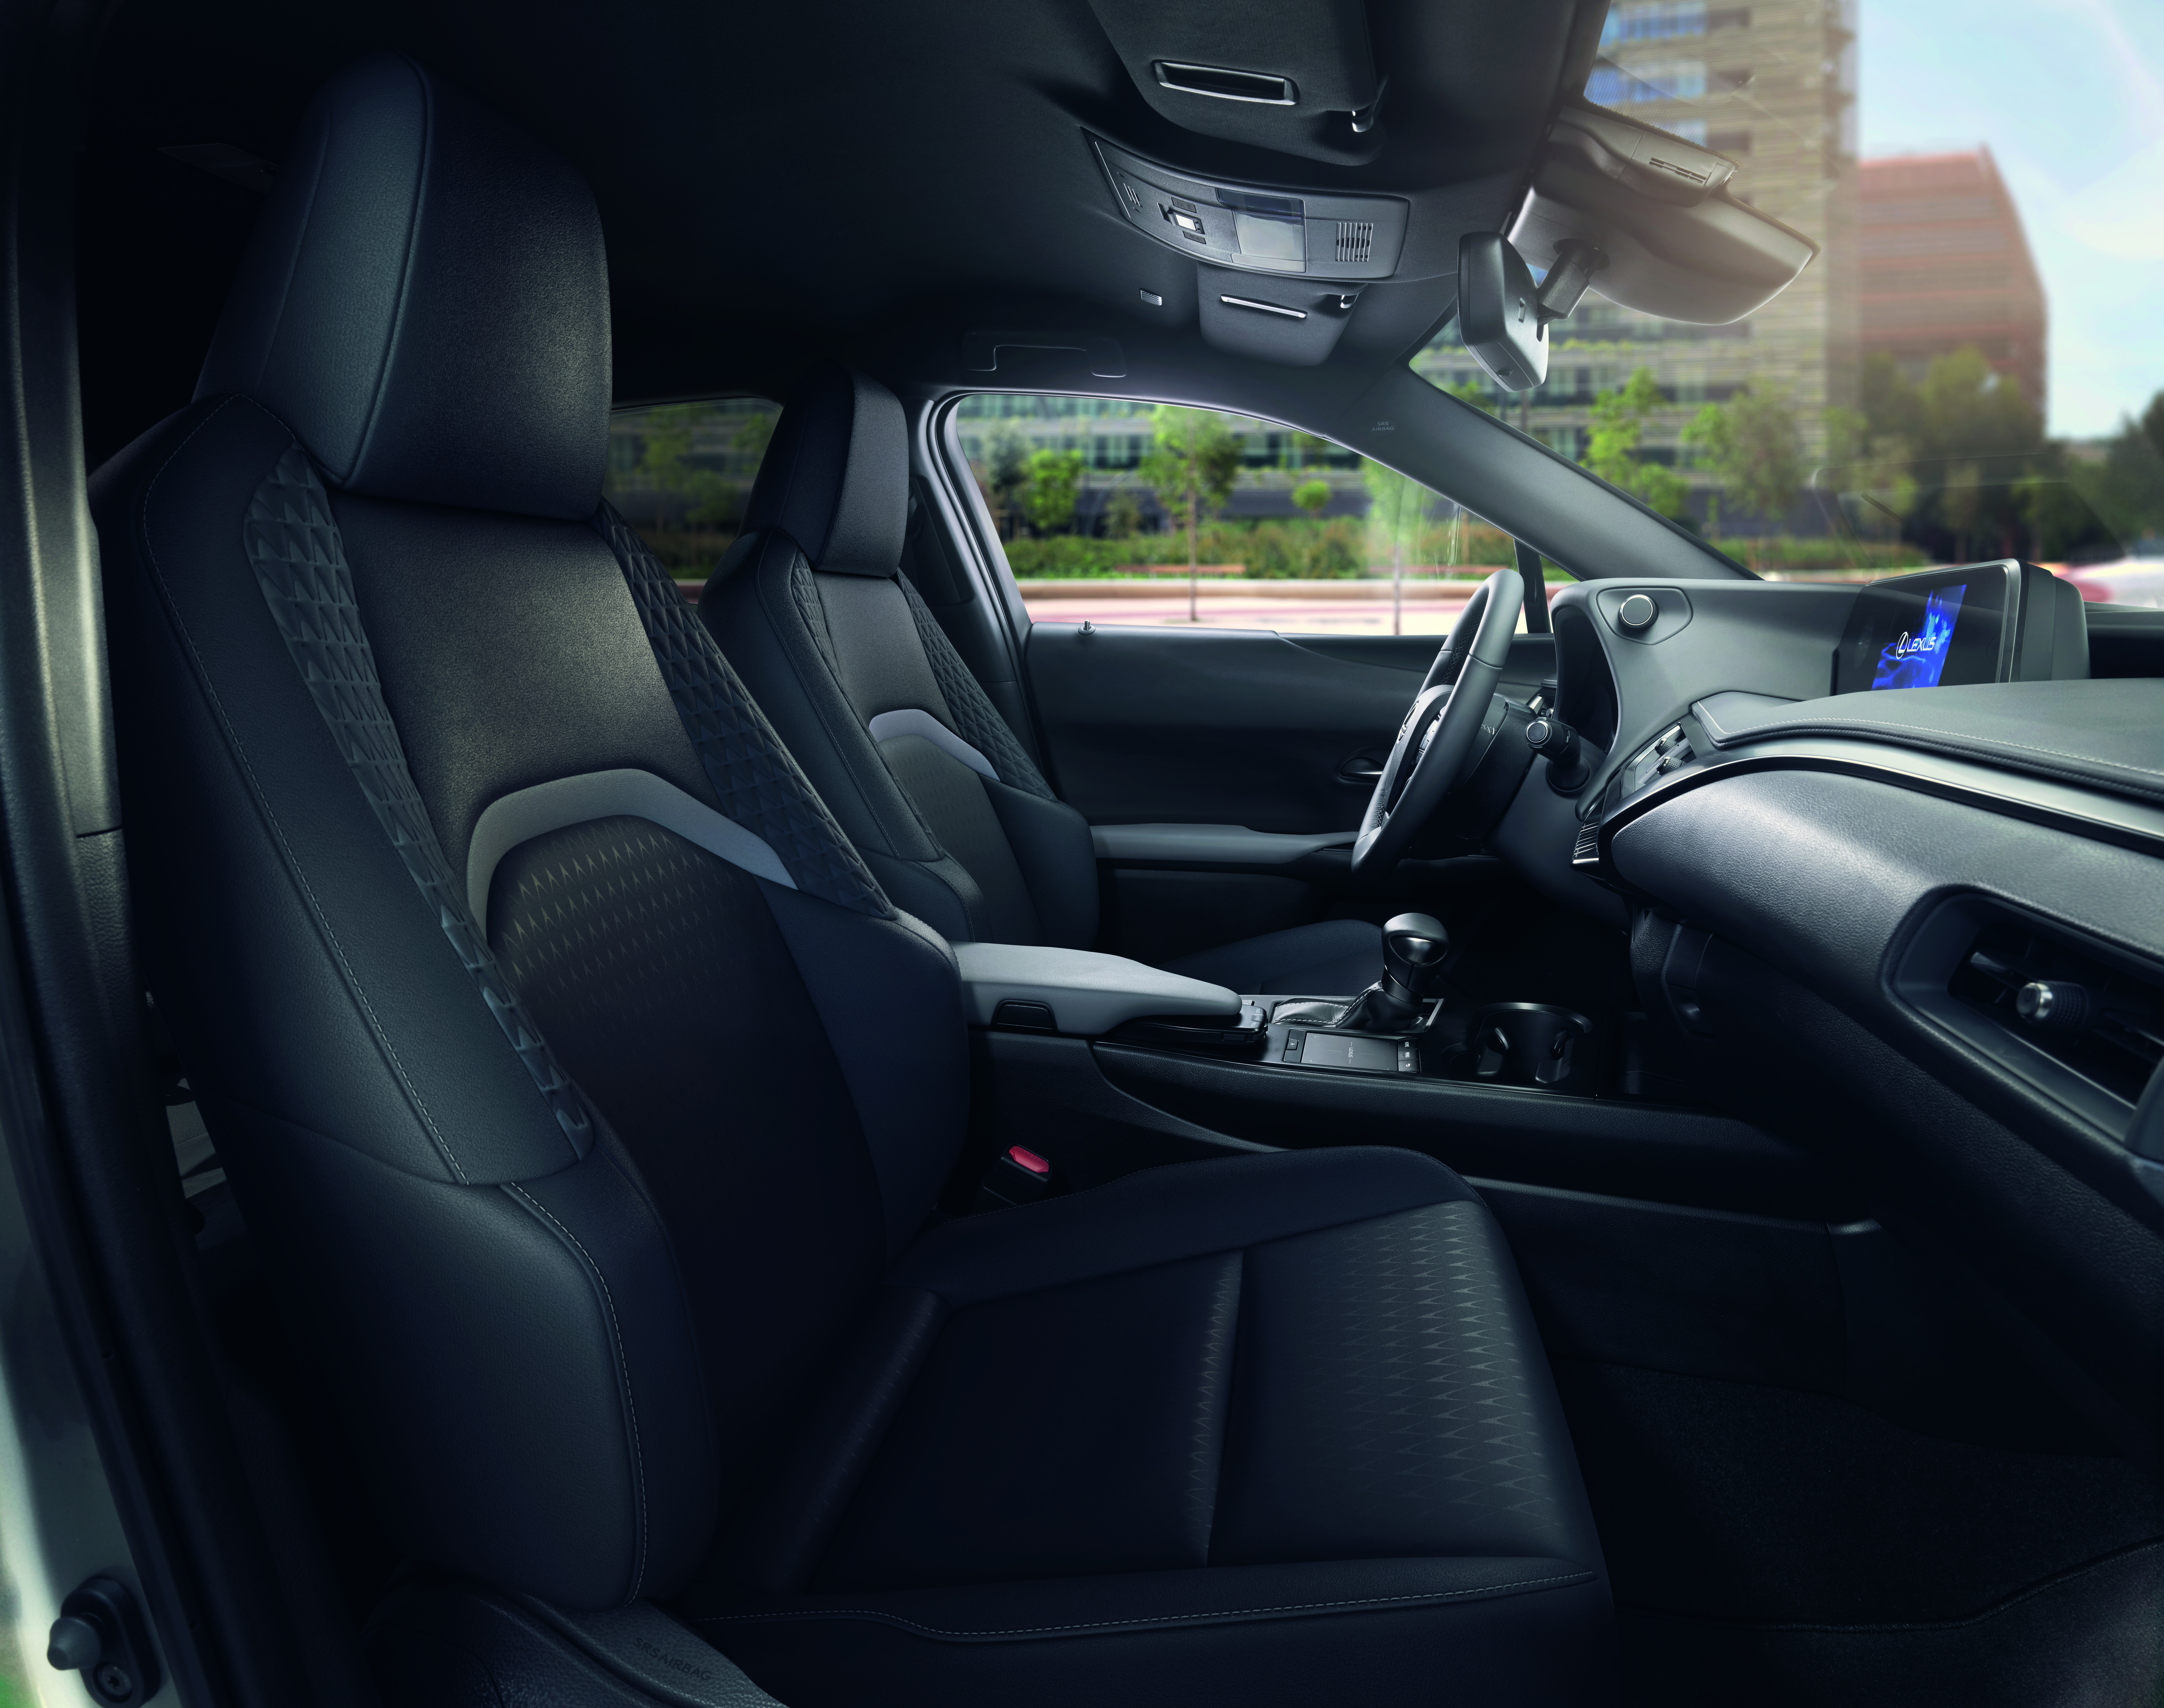 carousel-UX-250h-Sport-Edition-interior